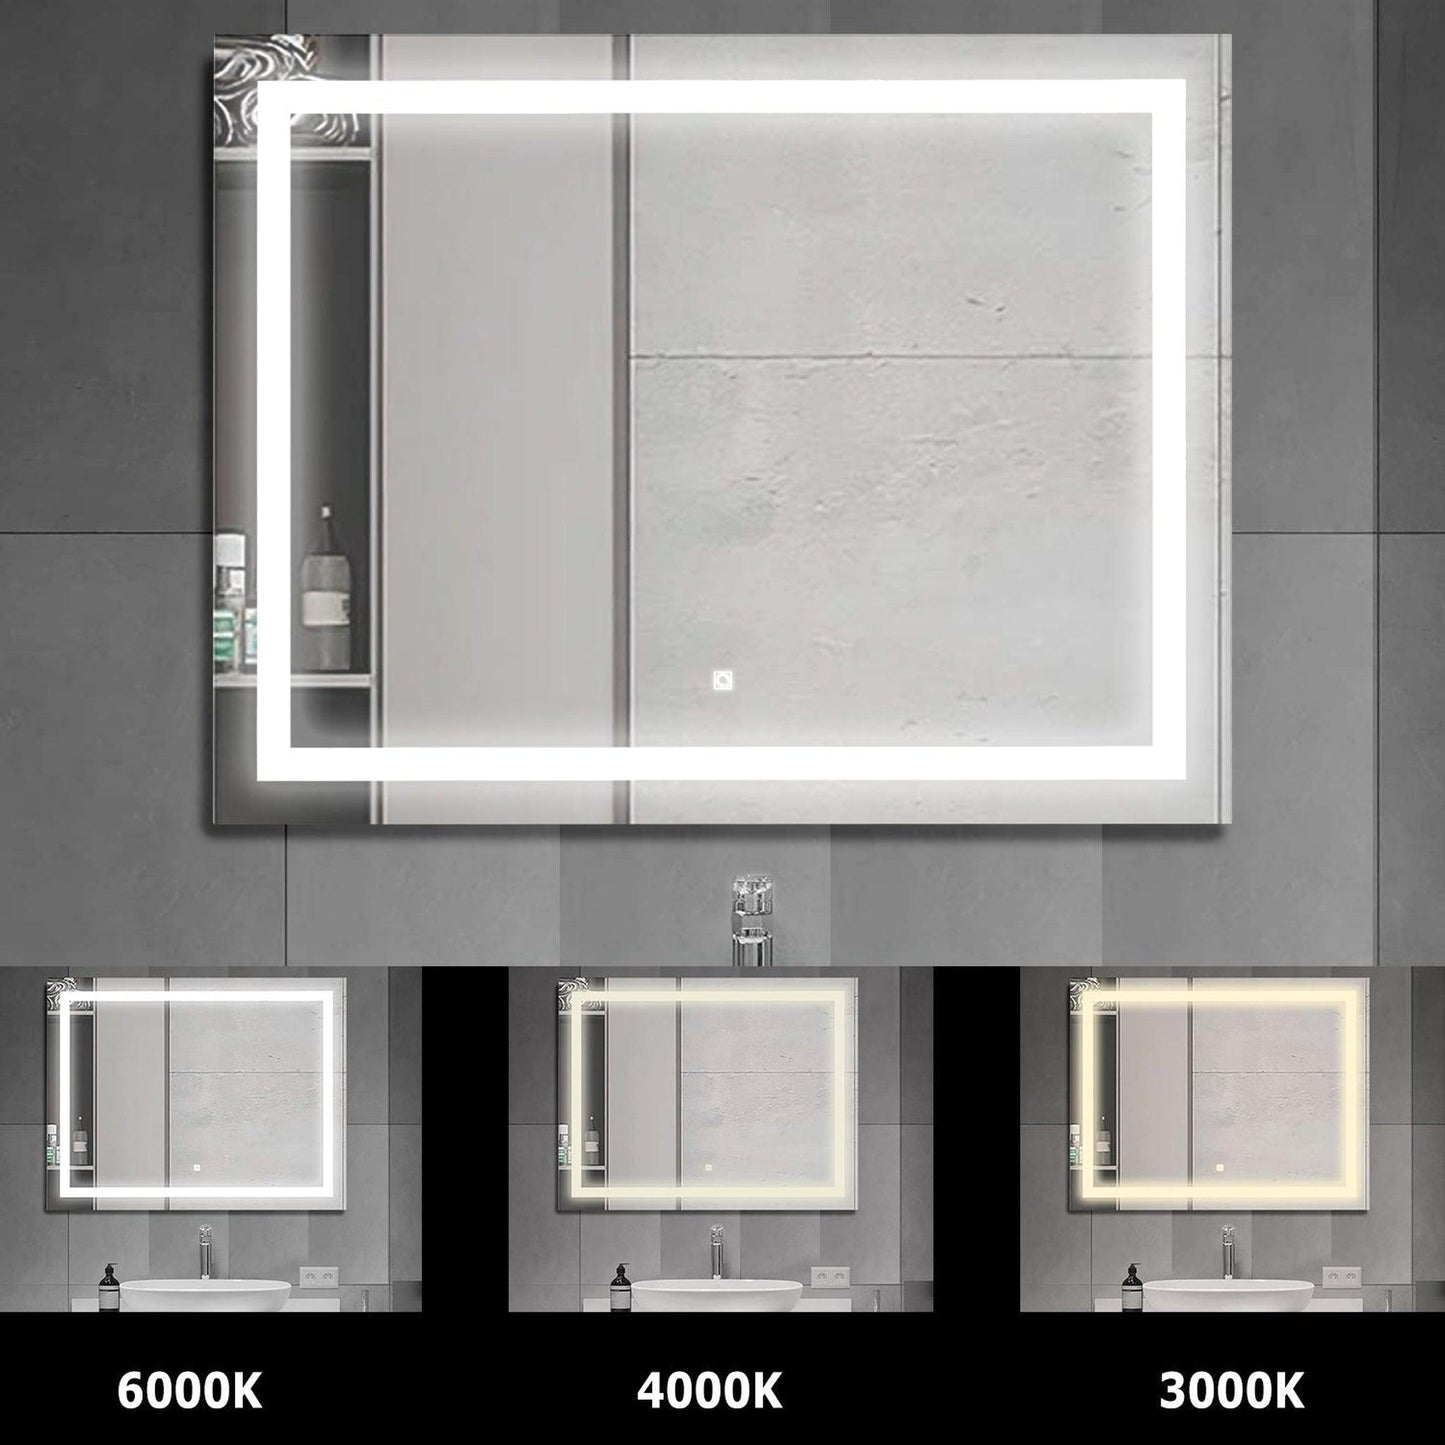 Clovis Goods 32" x 24" Frameless Rectangular Wall Mounted Bathroom Vanity LED Lighted Mirror With Touch Sensor and Built-in Defogger